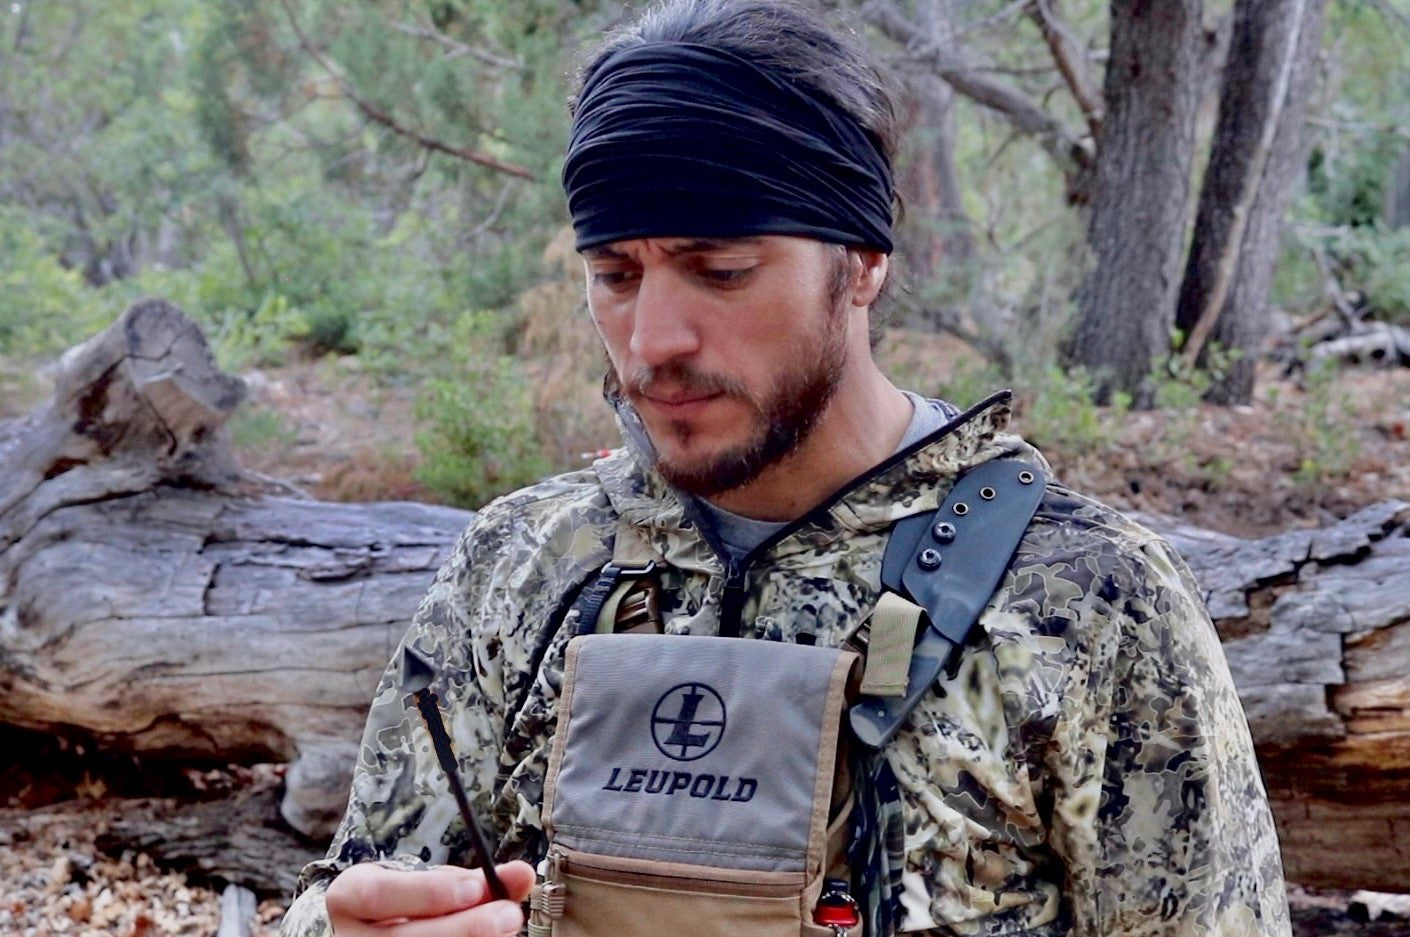 Brady Cervantes mugshot in camouflage